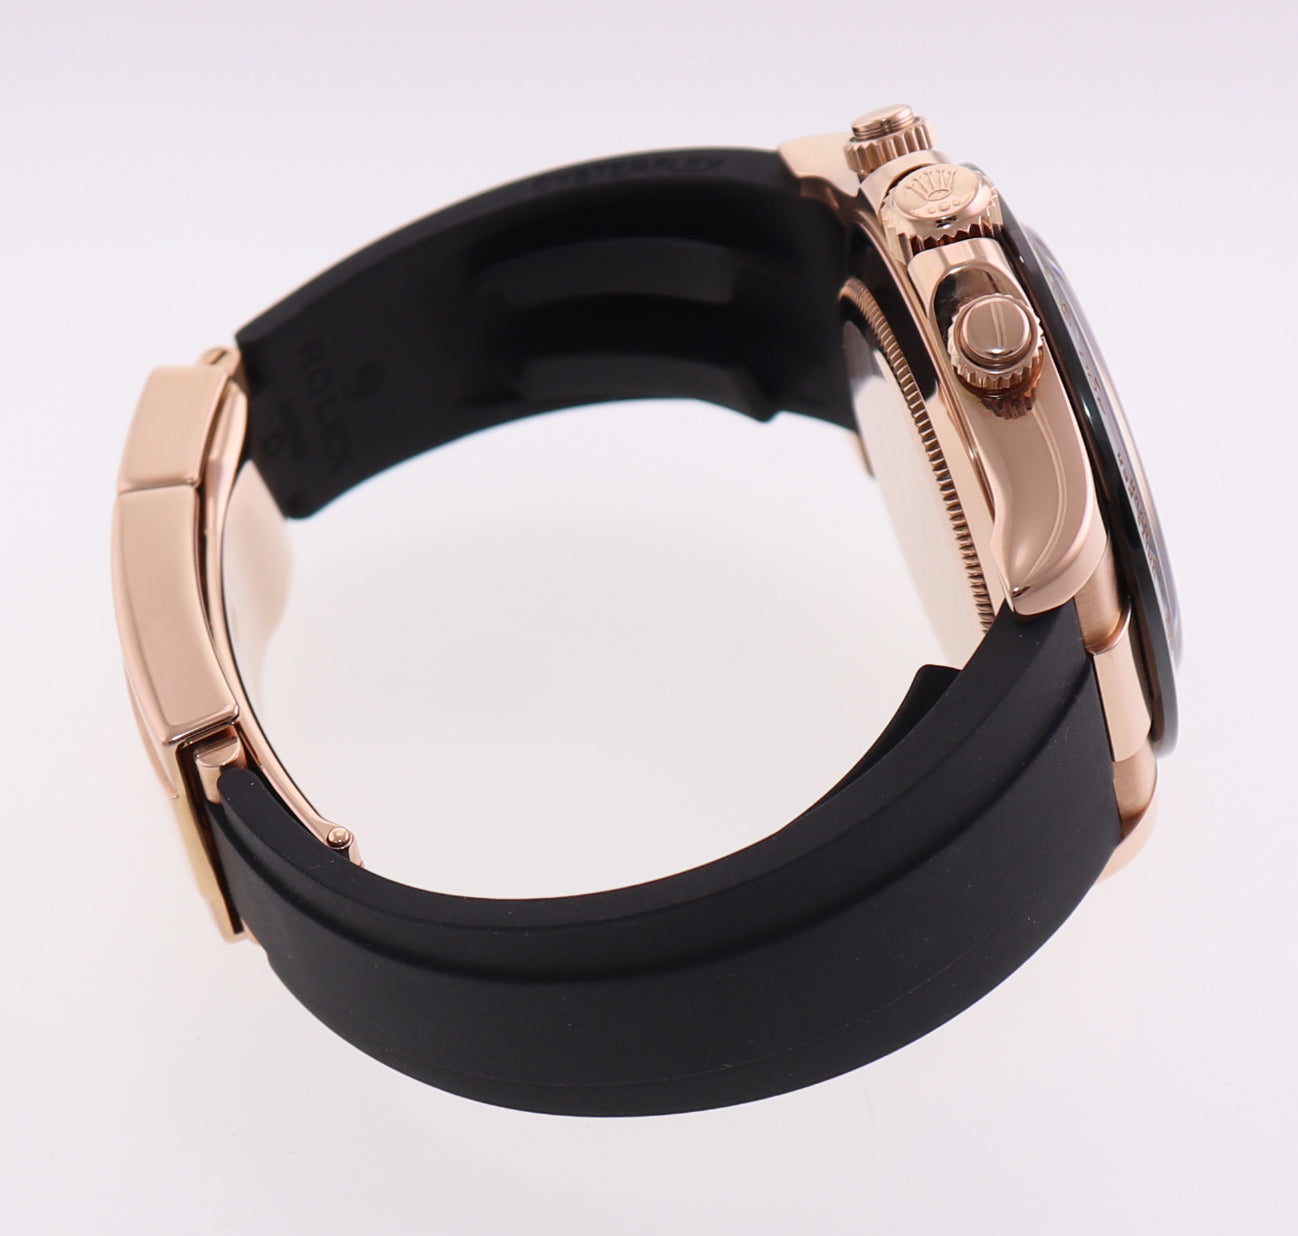 MINT PAPERS Rolex Daytona Ceramic 116515LN METEORITE Rose Gold Oysterflex Watch